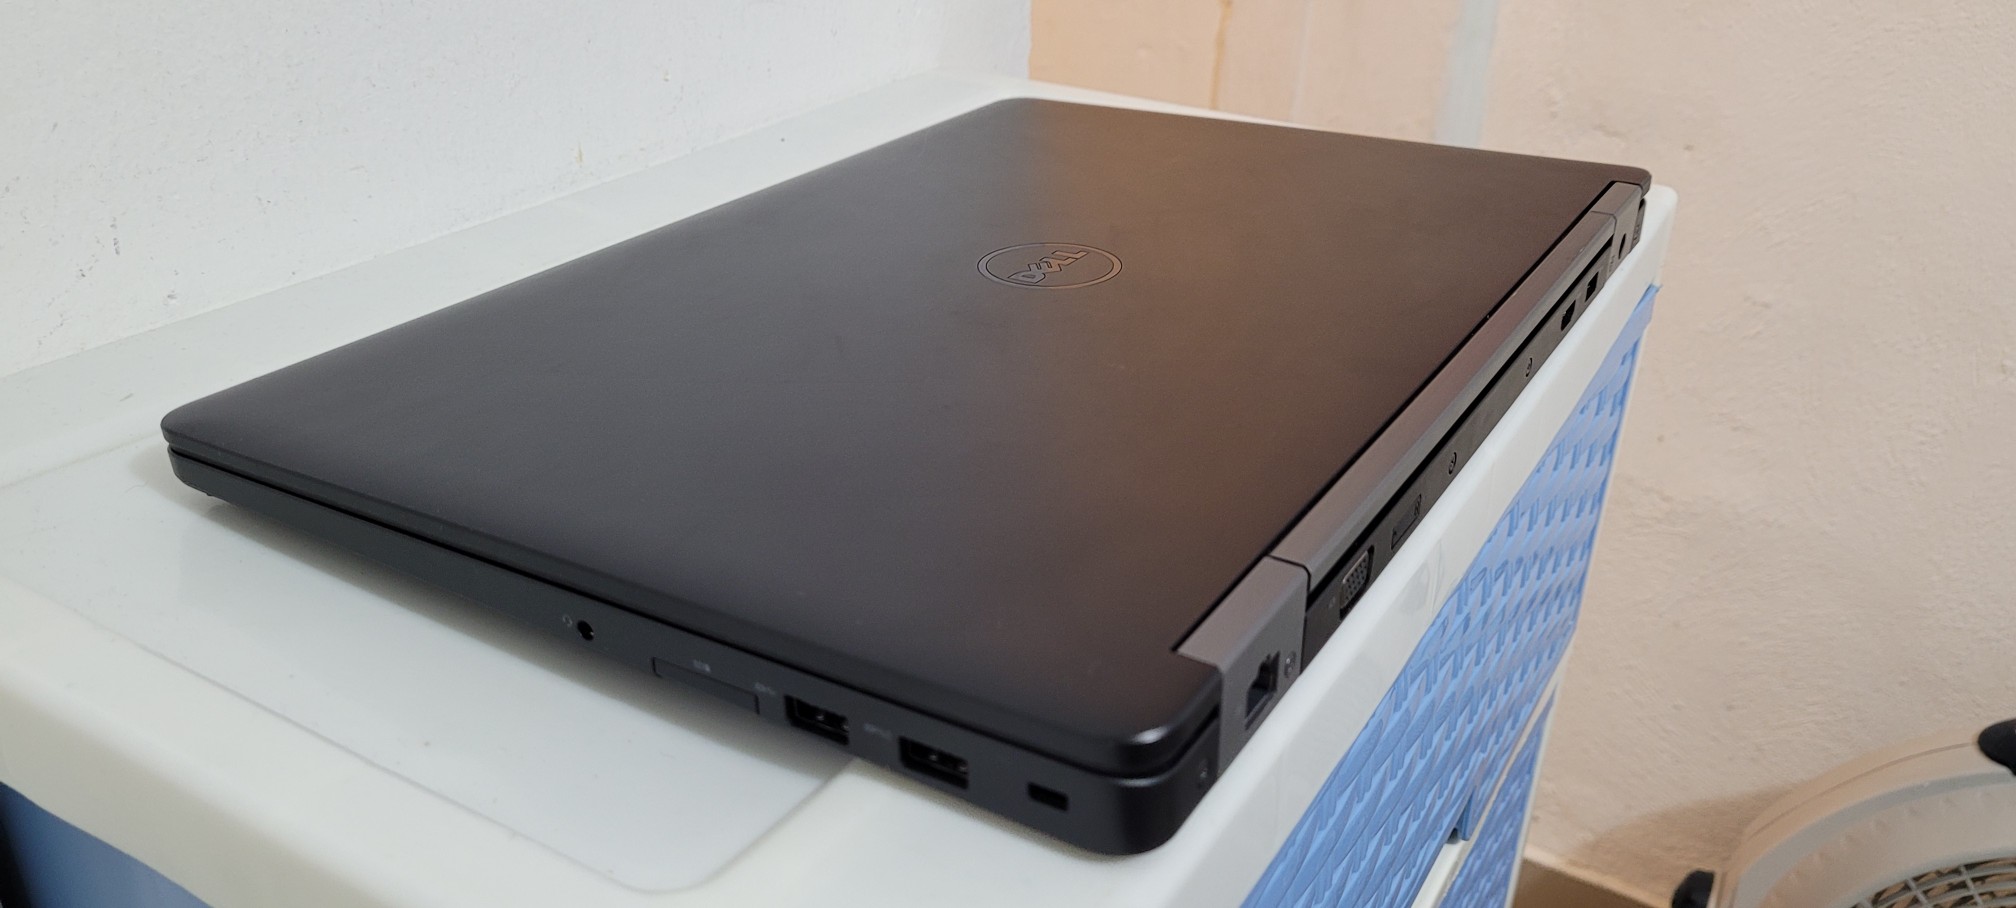 computadoras y laptops - Laptop Dell 14 Pulg Core i7 6ta Ram 16gb ddr4 Disco 256gb SSD Video 8gb 2